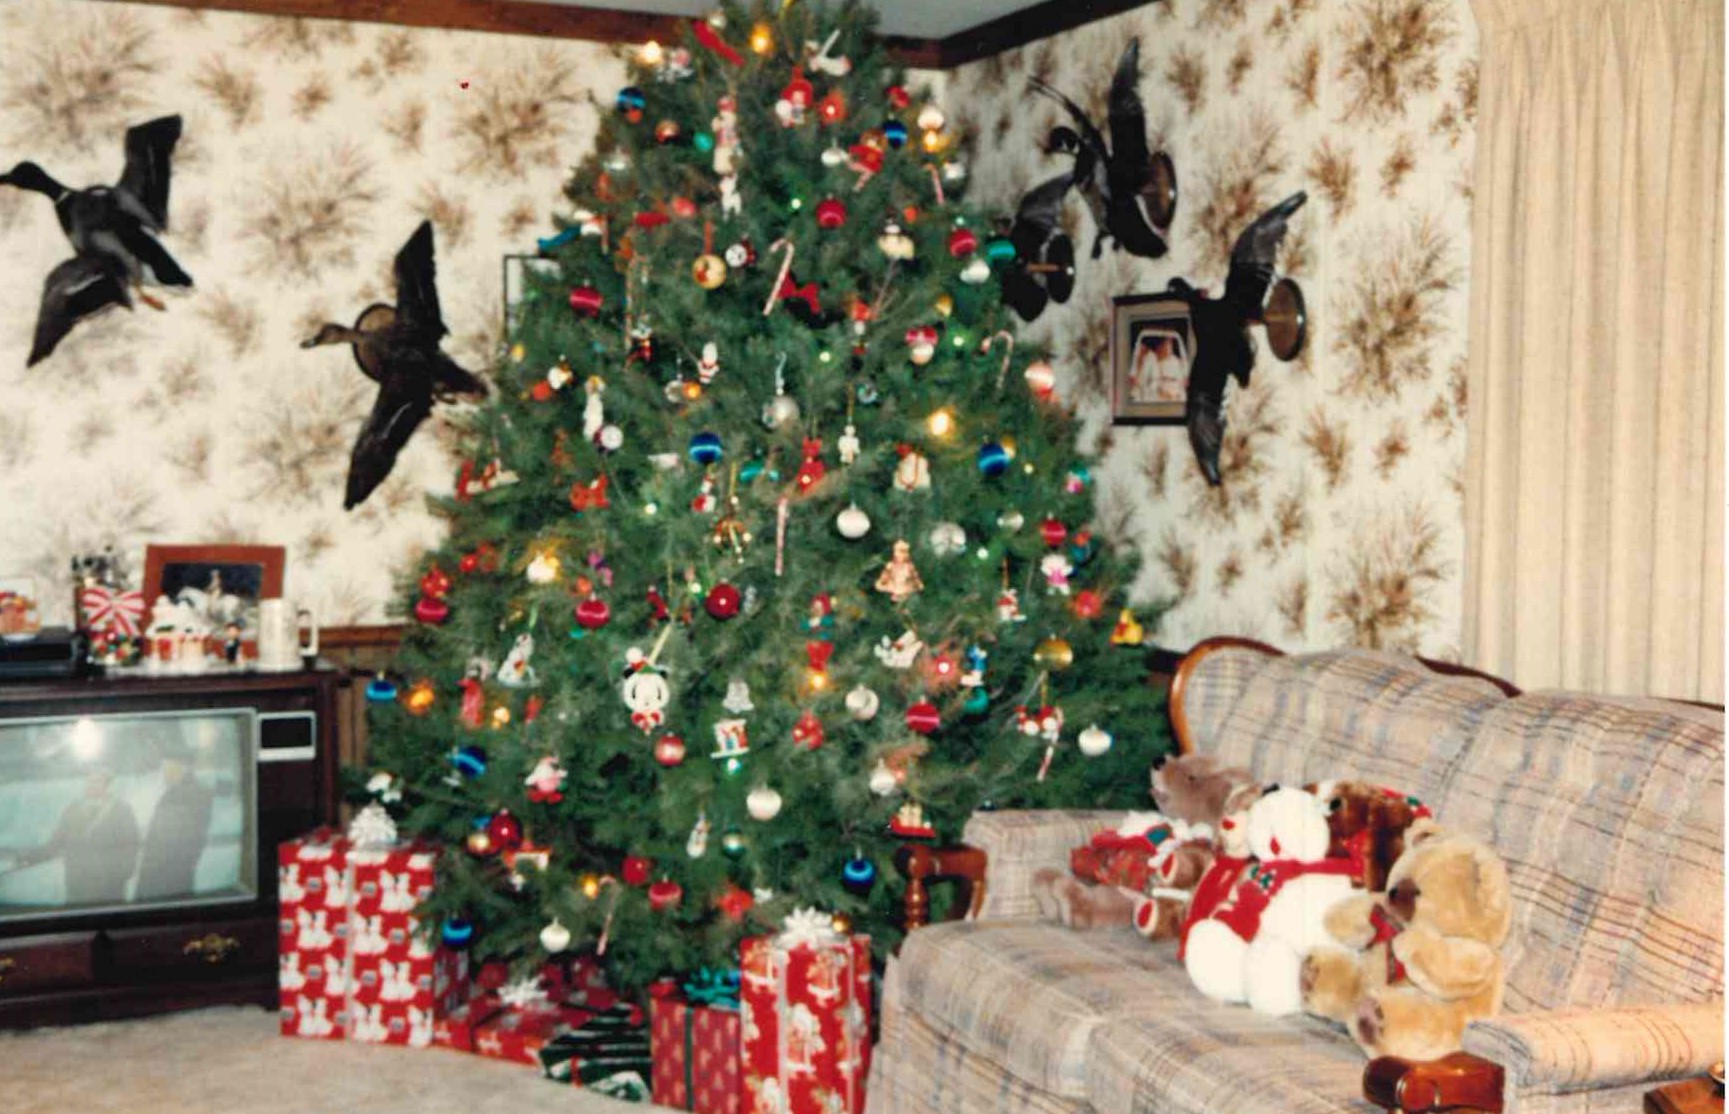 George and Elaine's beautiful Christmas tree